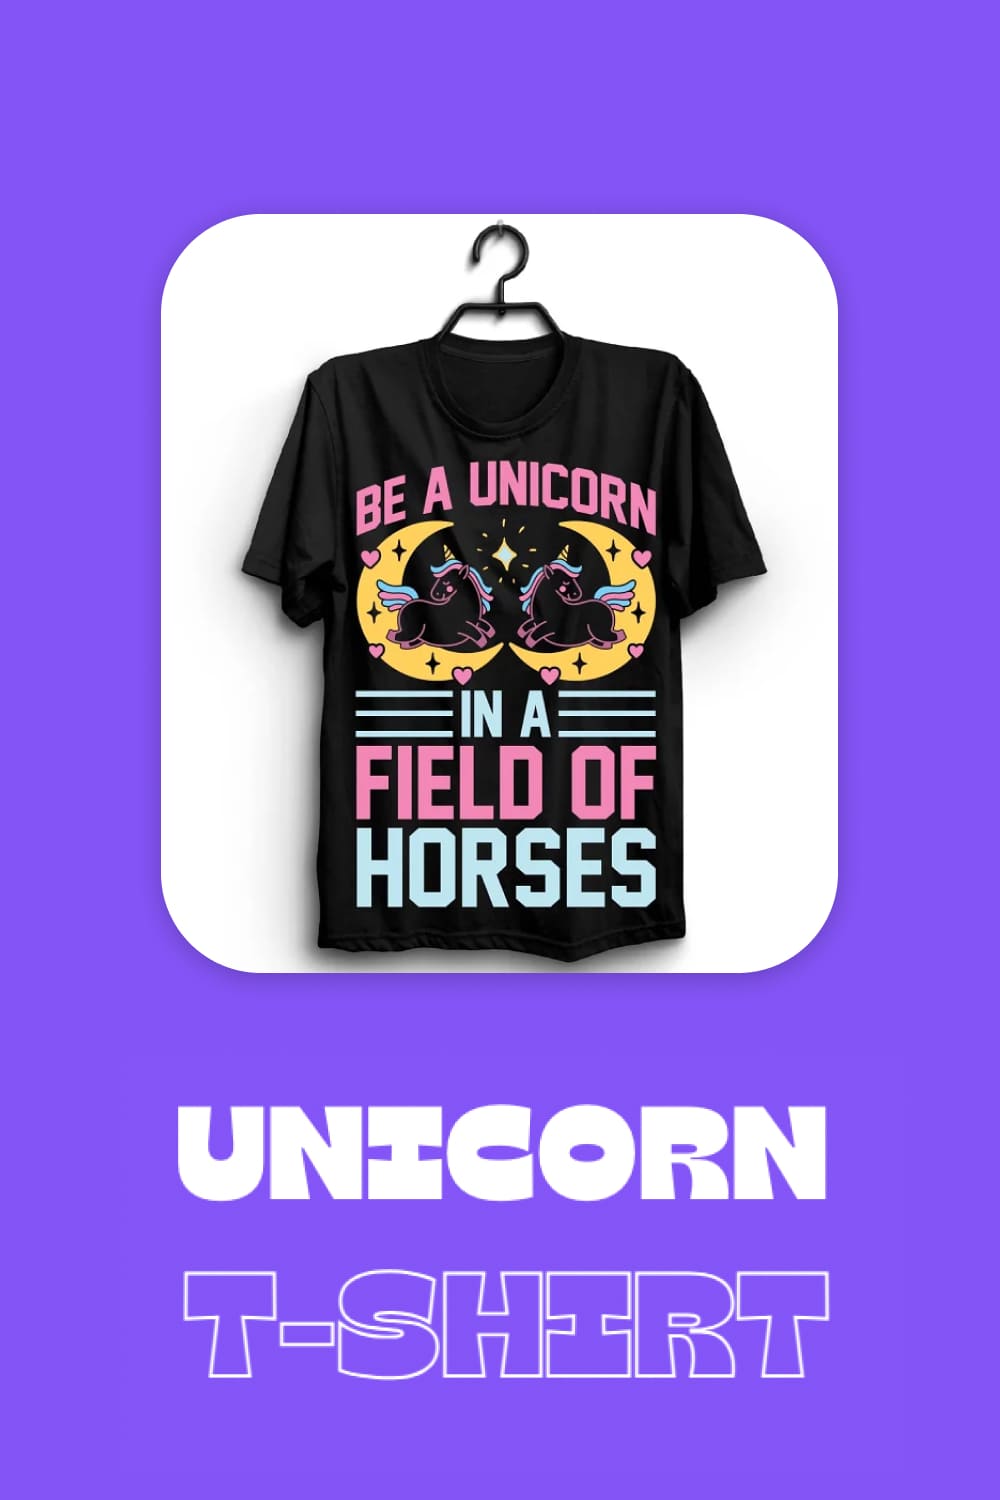 Unicorn T-Shirt Design Bundle - Pinterest.